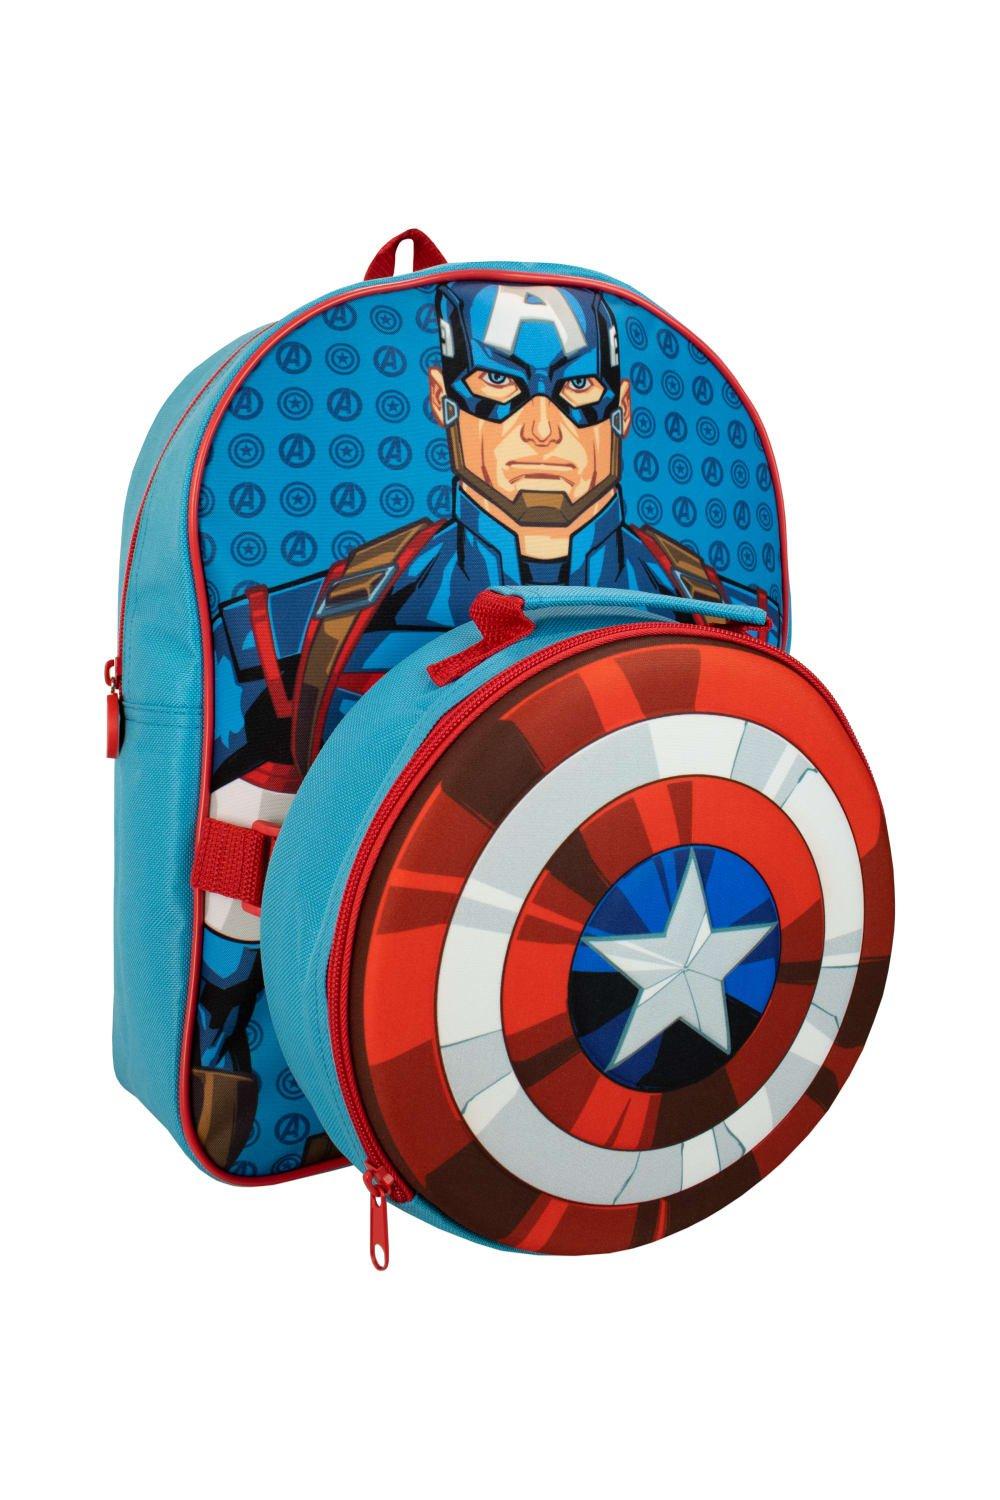 Детский комплект рюкзака и сумки для обеда «Капитан Америка» Avengers, синий детский набор из рюкзака и сумки для завтрака история игрушек disney синий